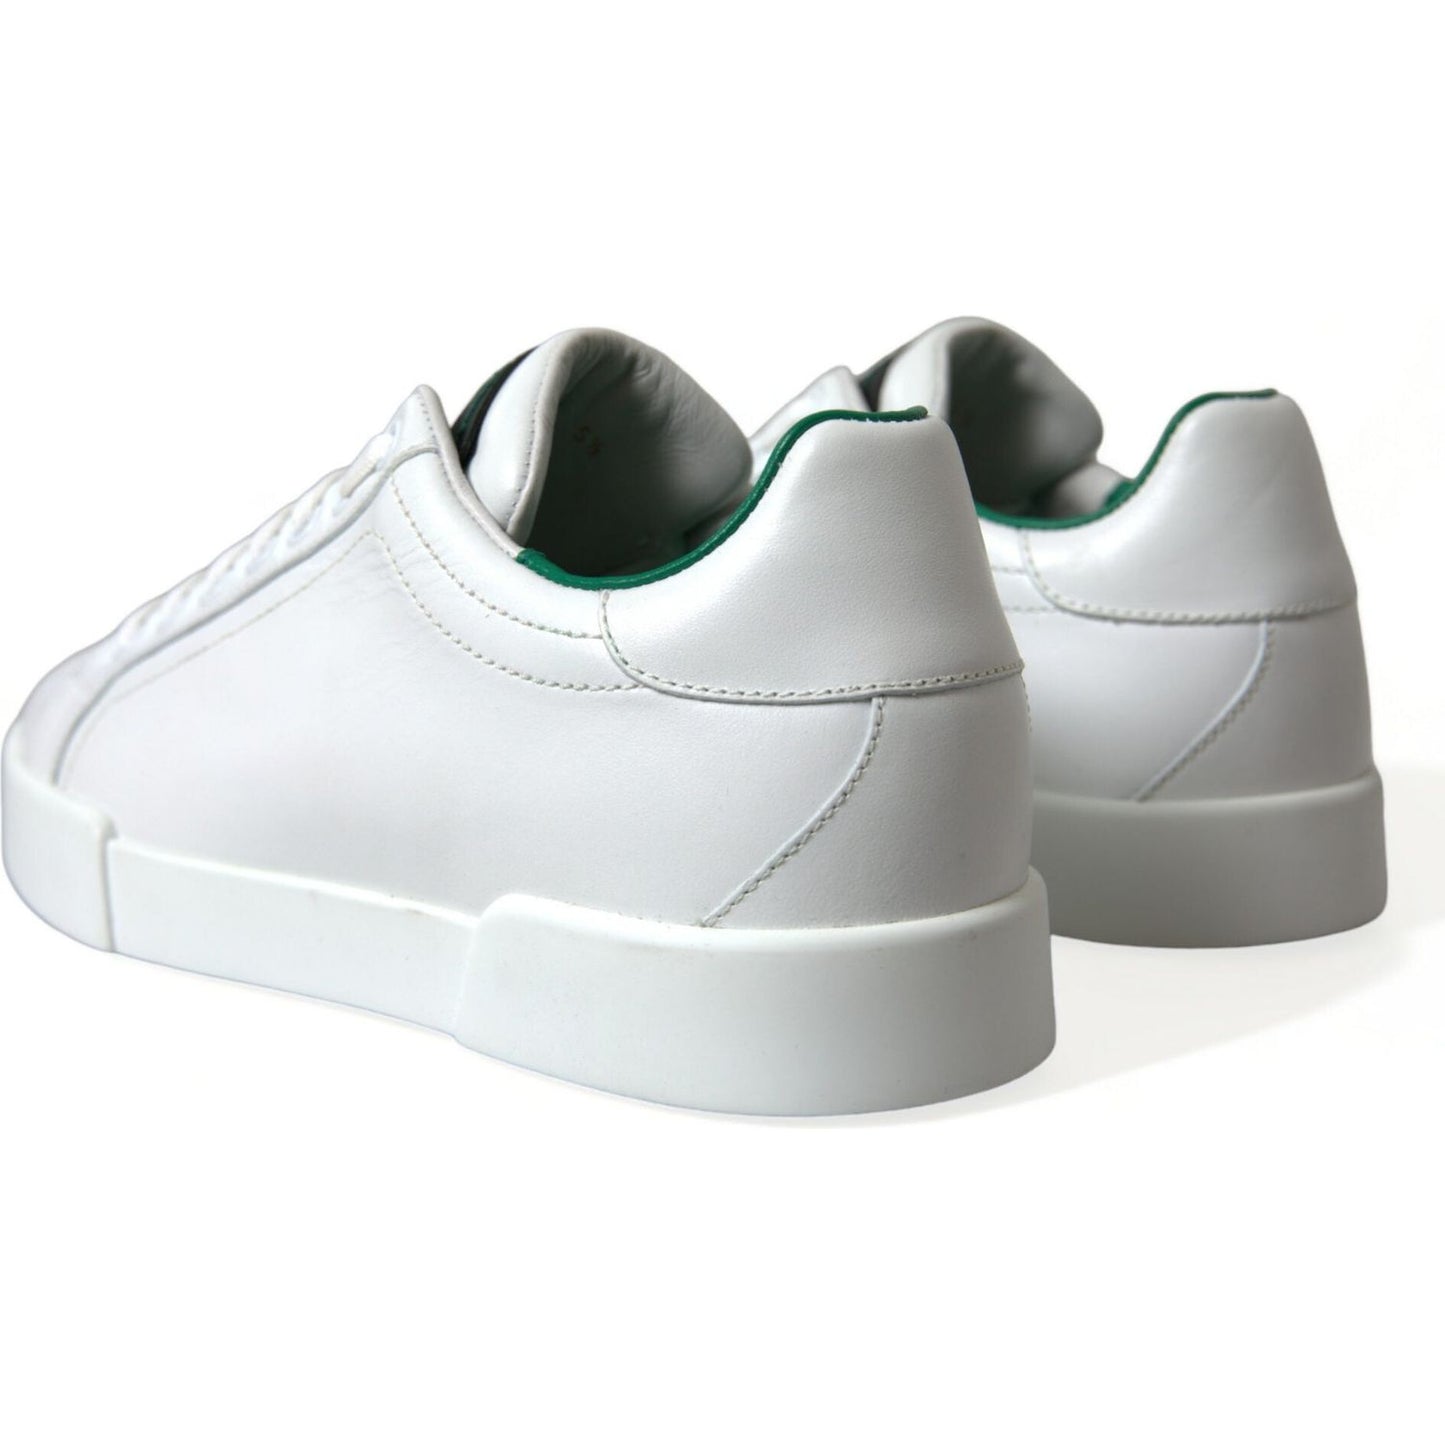 Dolce & Gabbana Elegant Portofino Calfskin Sneakers white-green-leather-portofino-sneakers-shoes